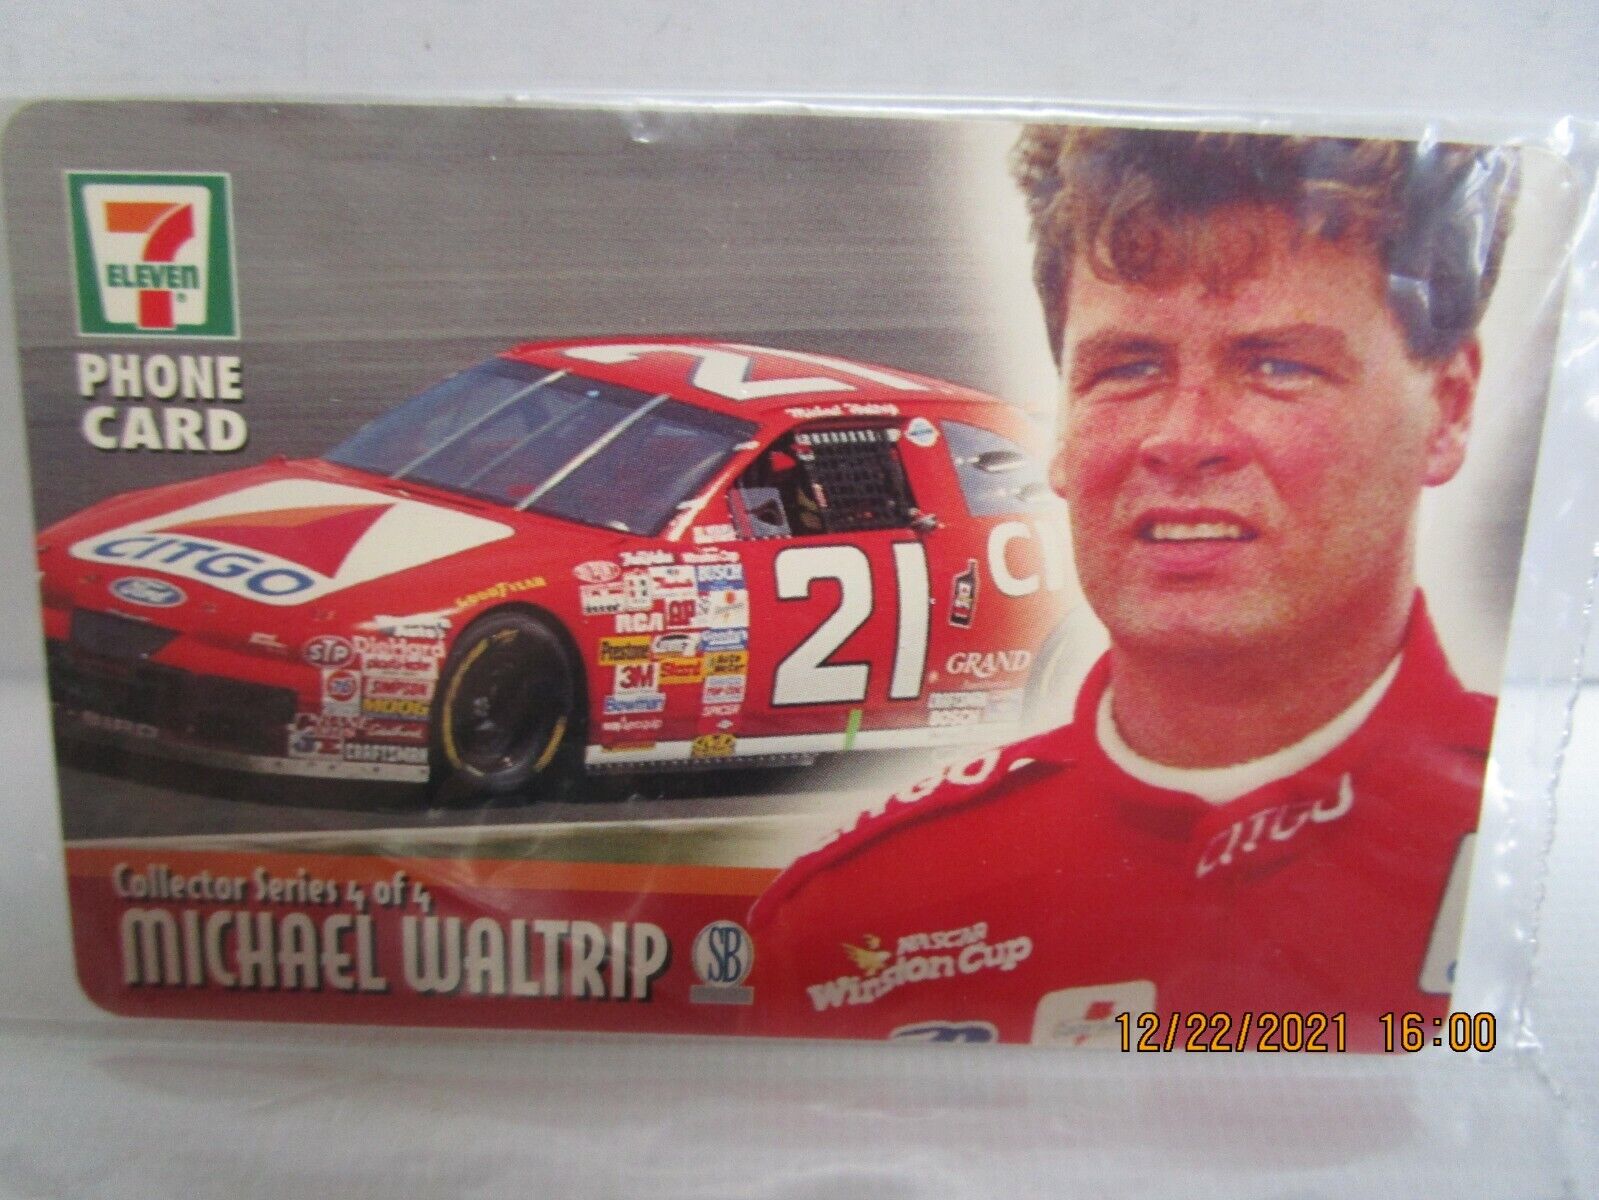 7-ELEVEN FRONTIER 5 MIN PHONE CARD 1996 NASCAR MICHAEL WALTRIP  PLASTIC SLEEVE